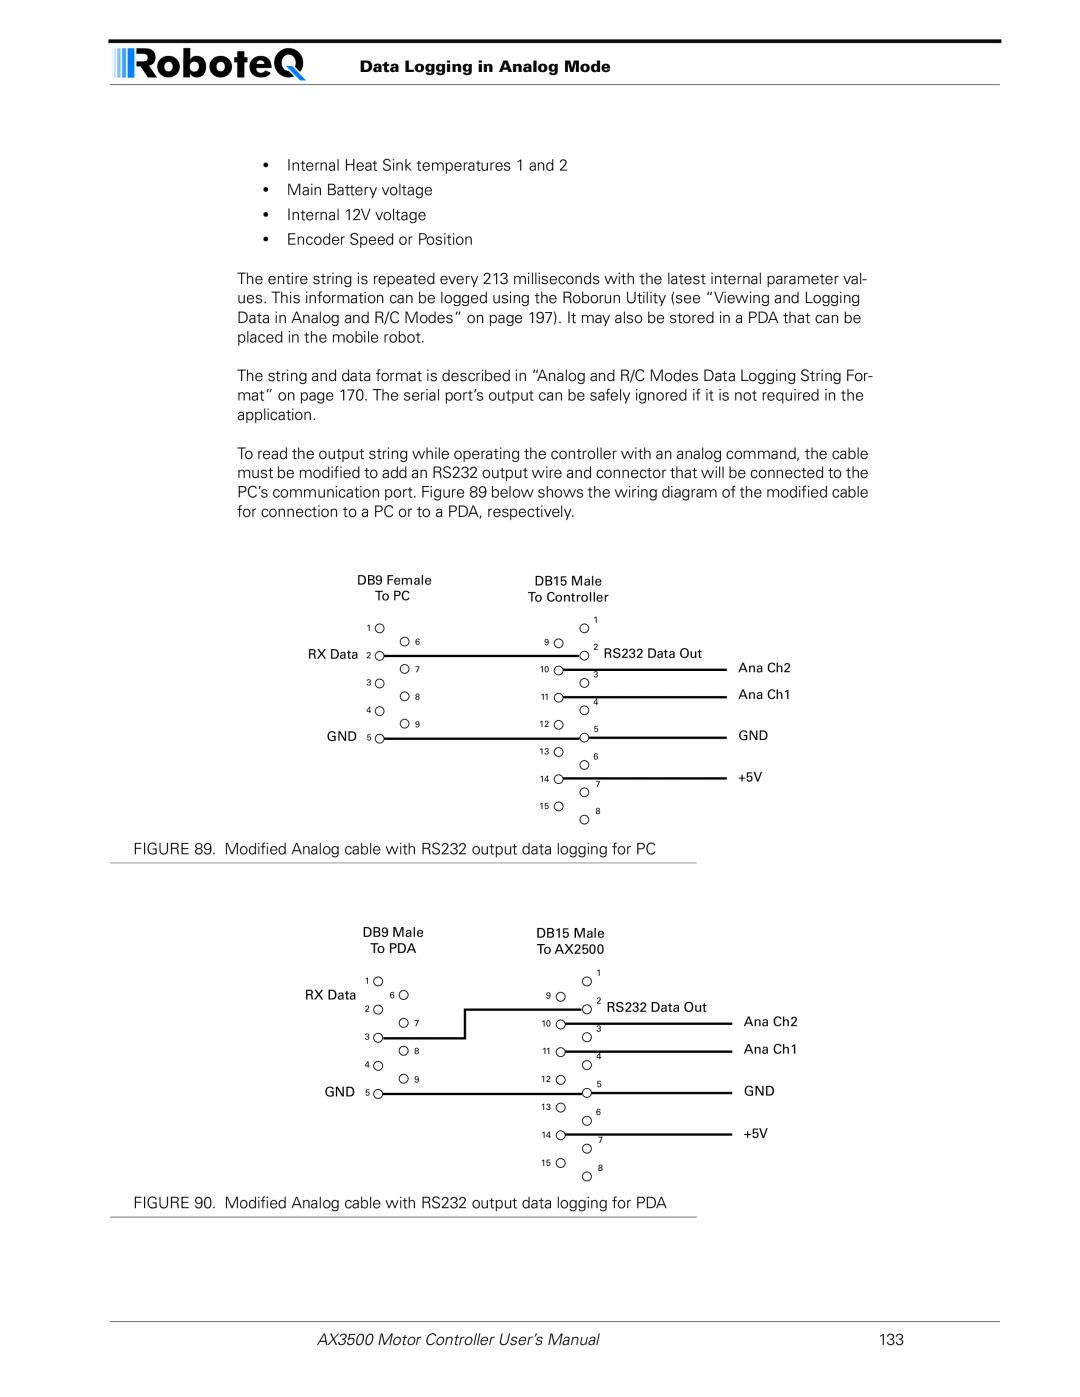 RoboteQ user manual Data Logging in Analog Mode, AX3500 Motor Controller User’s Manual 